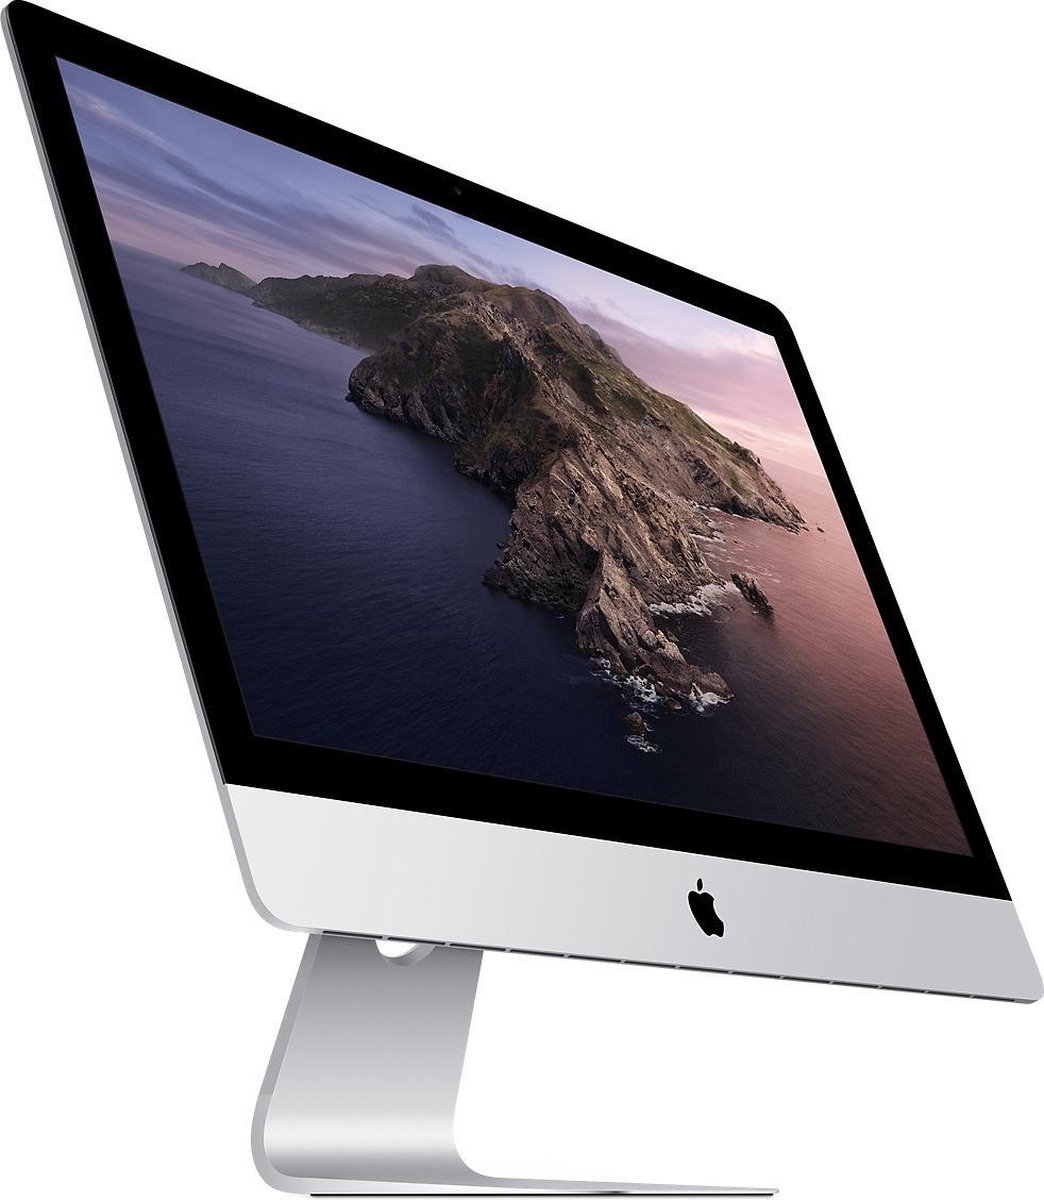 Refurbished iMac 27 inch iUsed